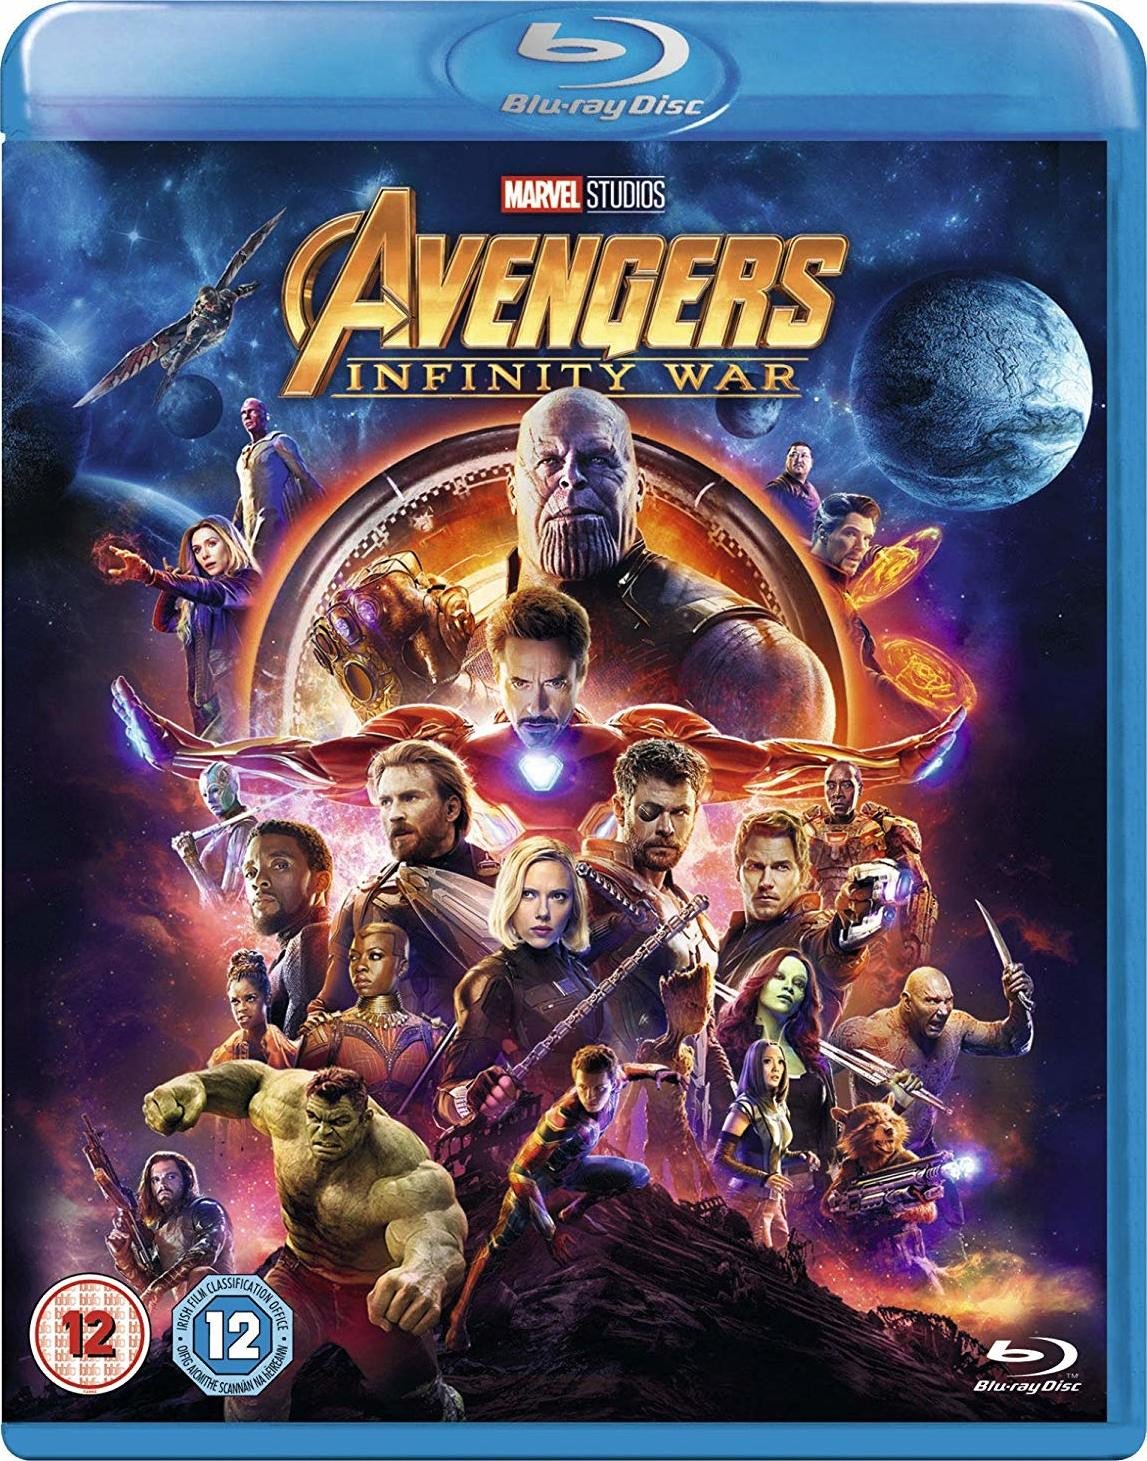 [复仇者联盟3].Avengers.Infinity.War.2018.3D.BRA.BluRay.1080p.AVC.DTS-HD.MA.7.1-Highvoltage    46.3G-1.jpg